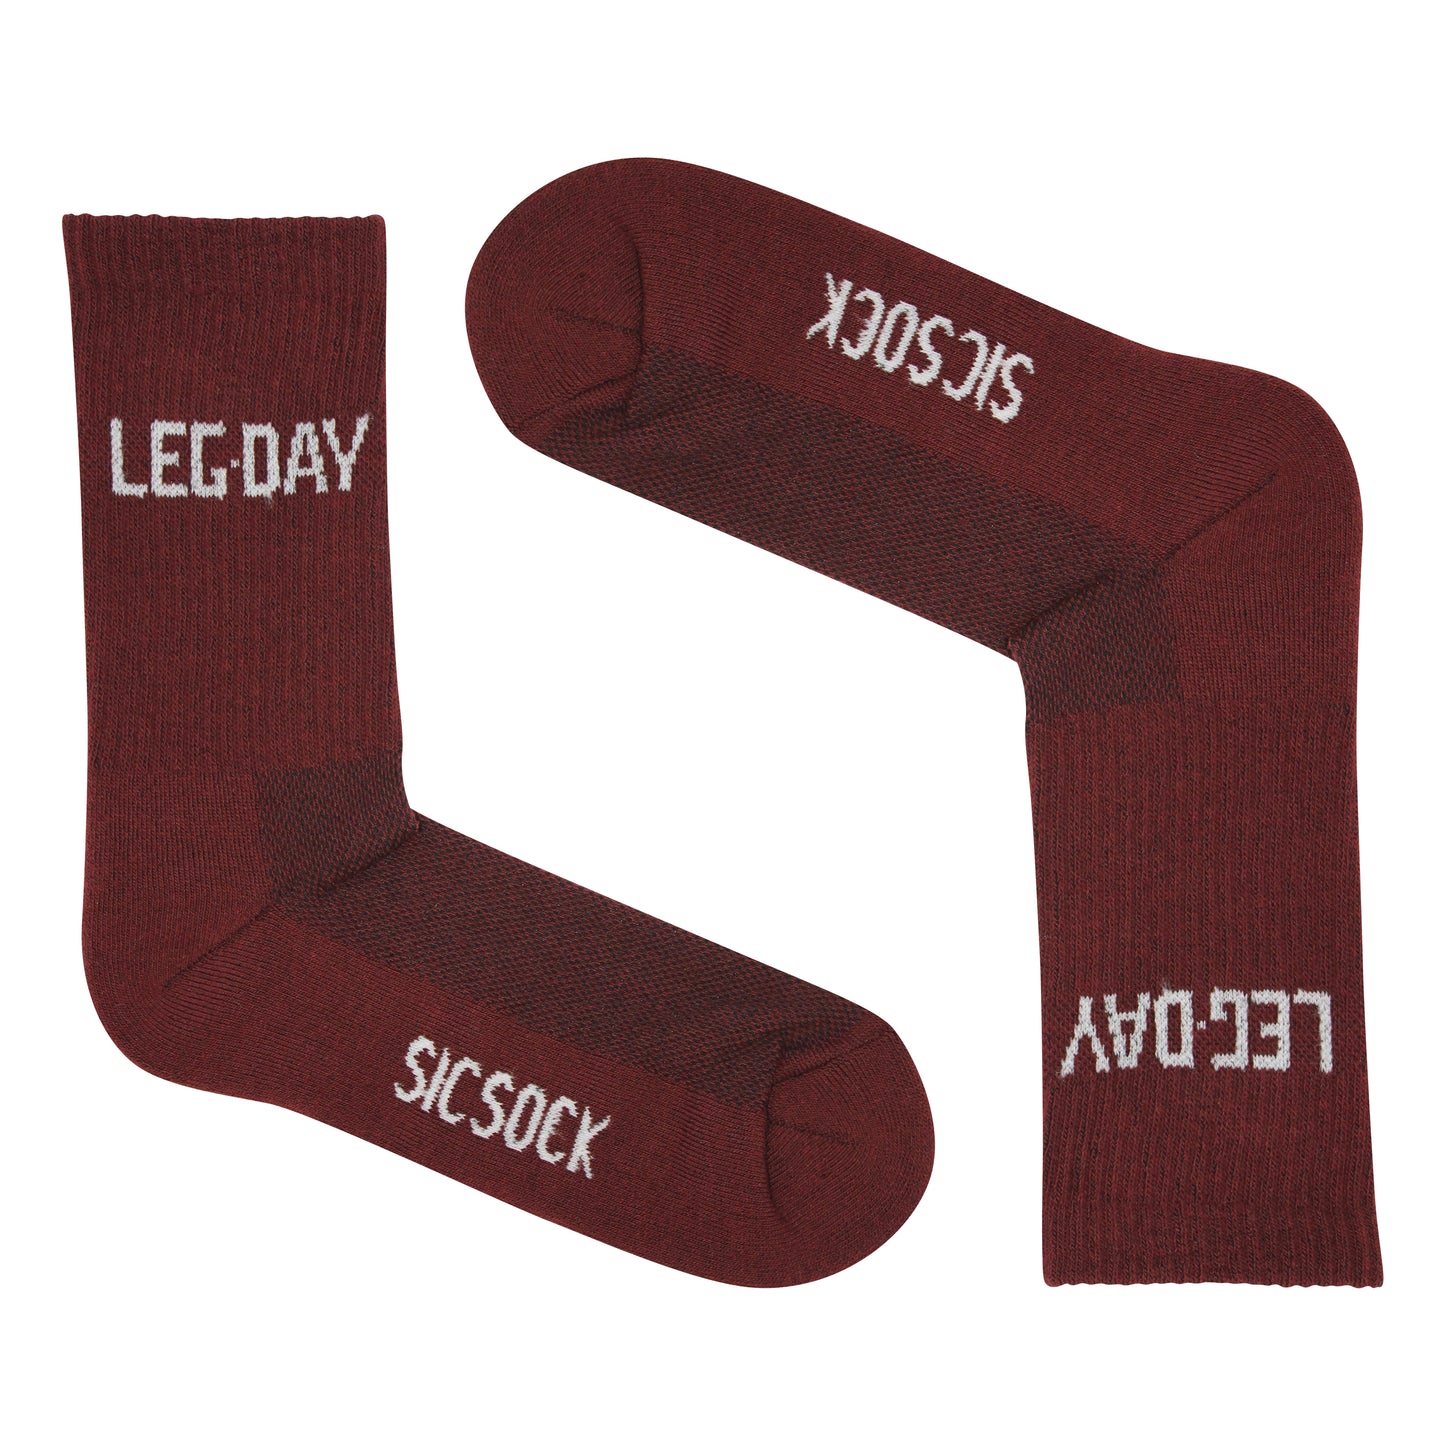 Sicsock - Gymwear Leg Day Socks